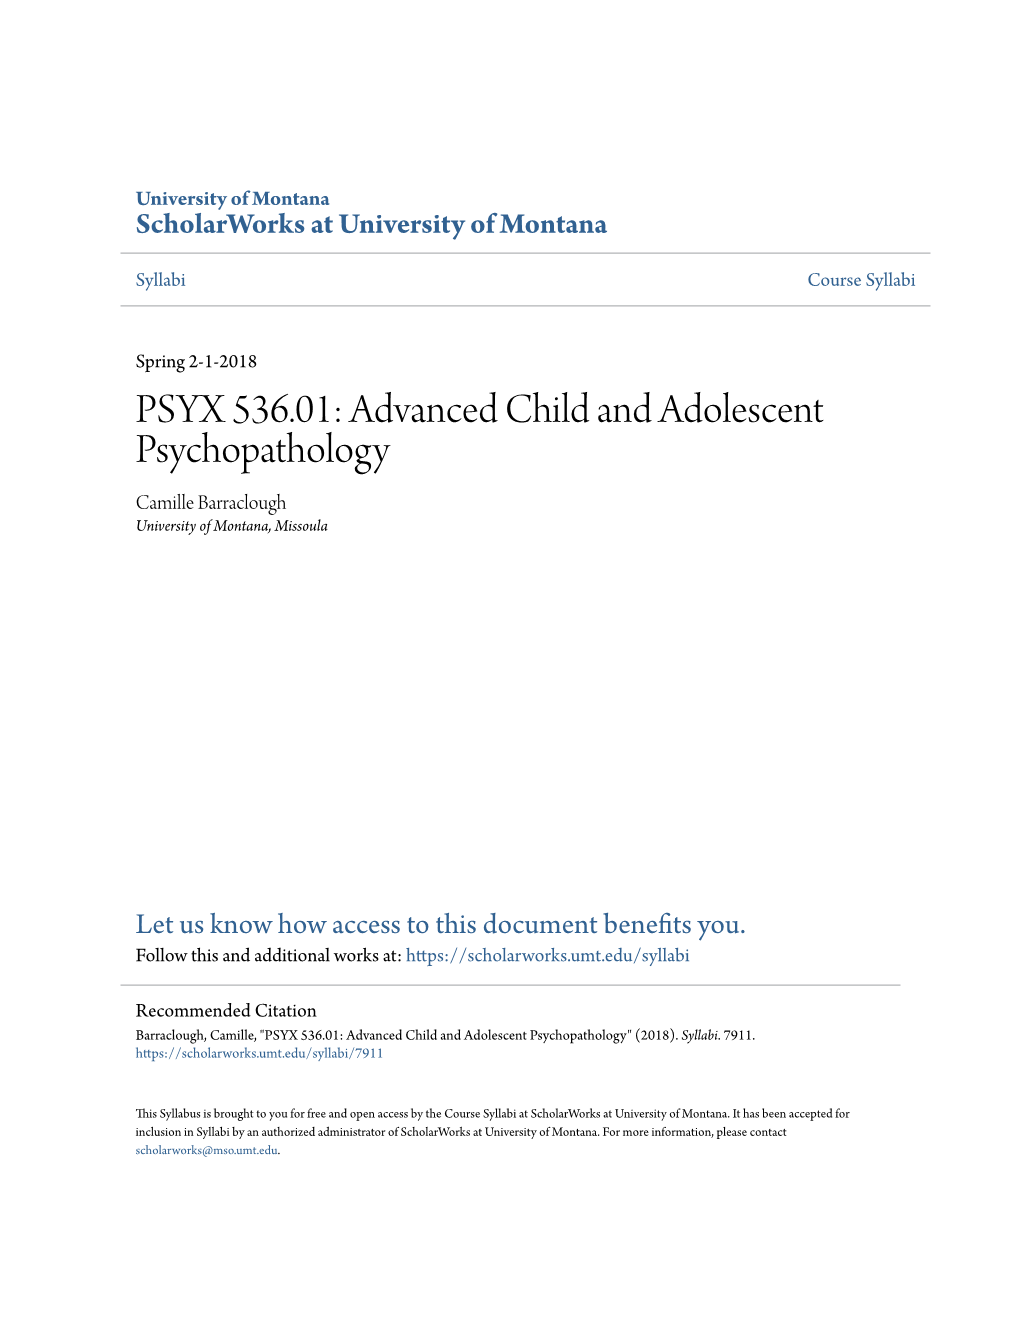 Advanced Child and Adolescent Psychopathology Camille Barraclough University of Montana, Missoula